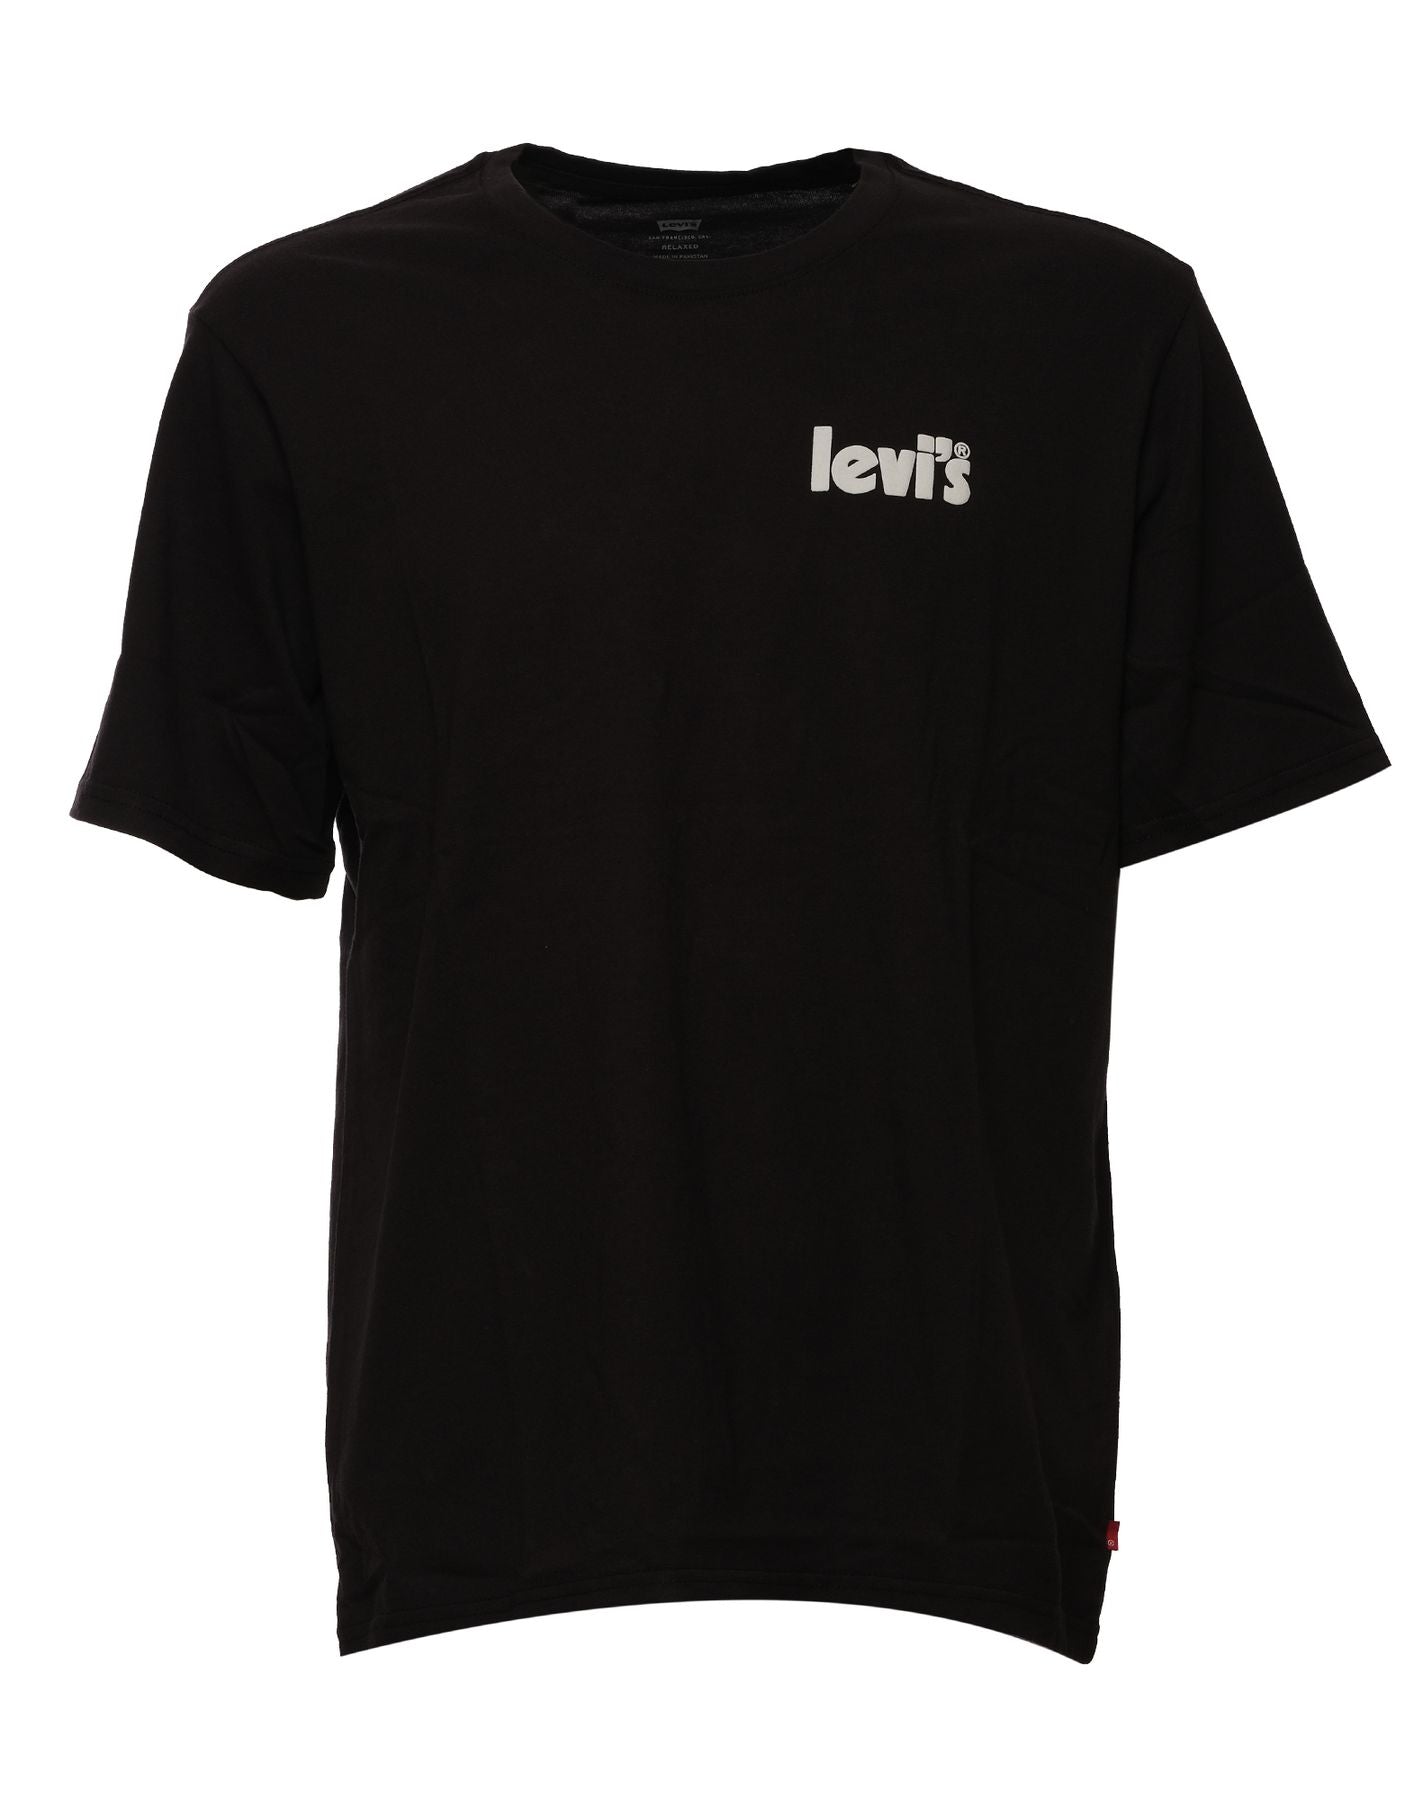 Camiseta hombre 16143 0837 CAVIAR Levi's